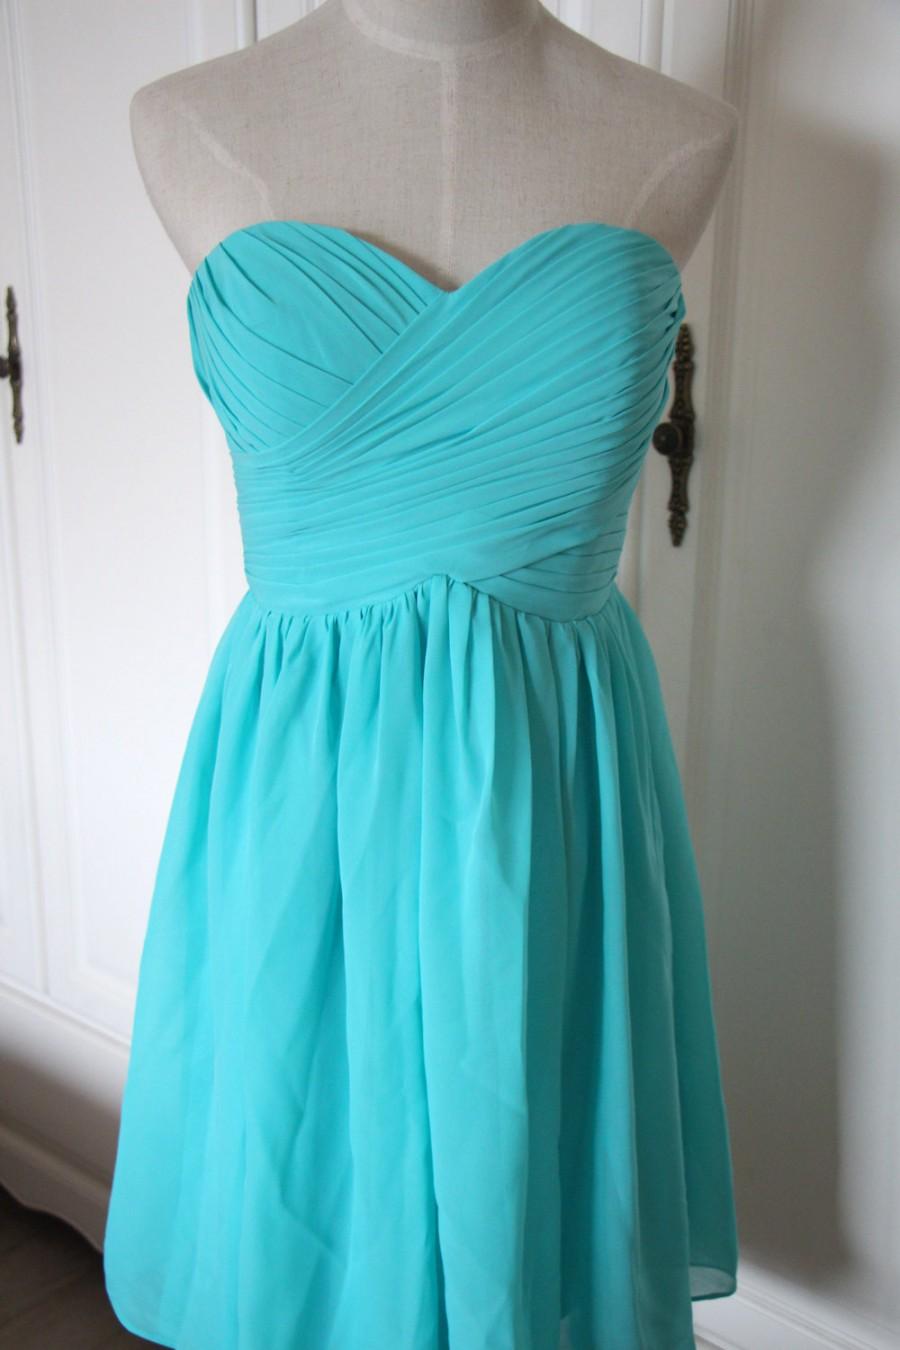 Mariage - Blue Sweetheart Bridesmaid Dress Knee-length/Floor-length Chiffon Strapless Bridesmaid Dress-Custom Dress